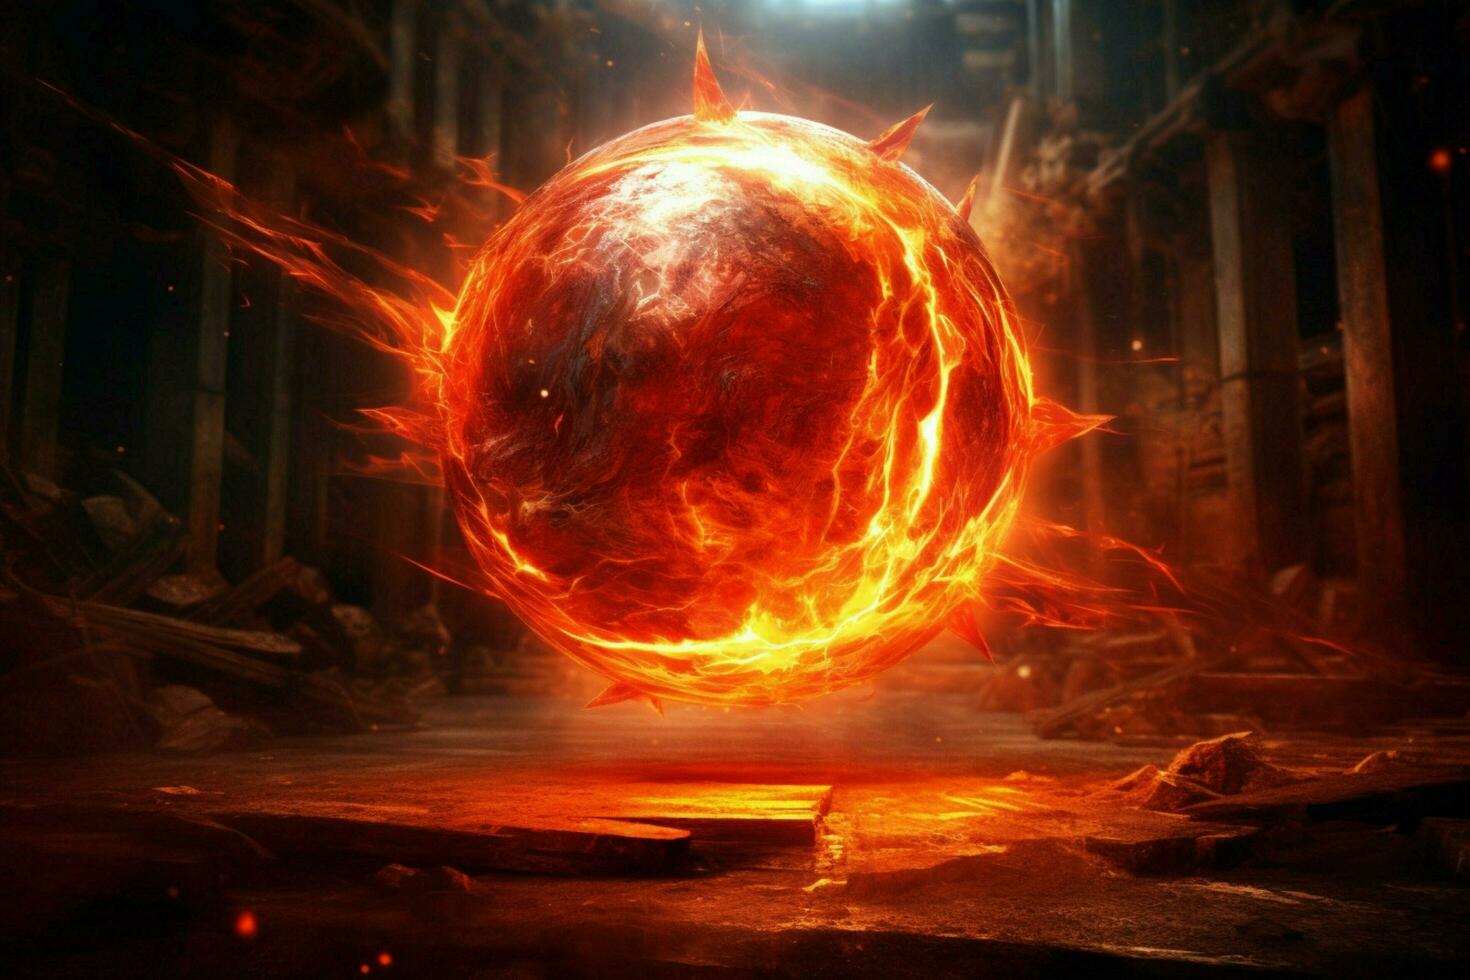 A brilliant ball of fiery energy photo